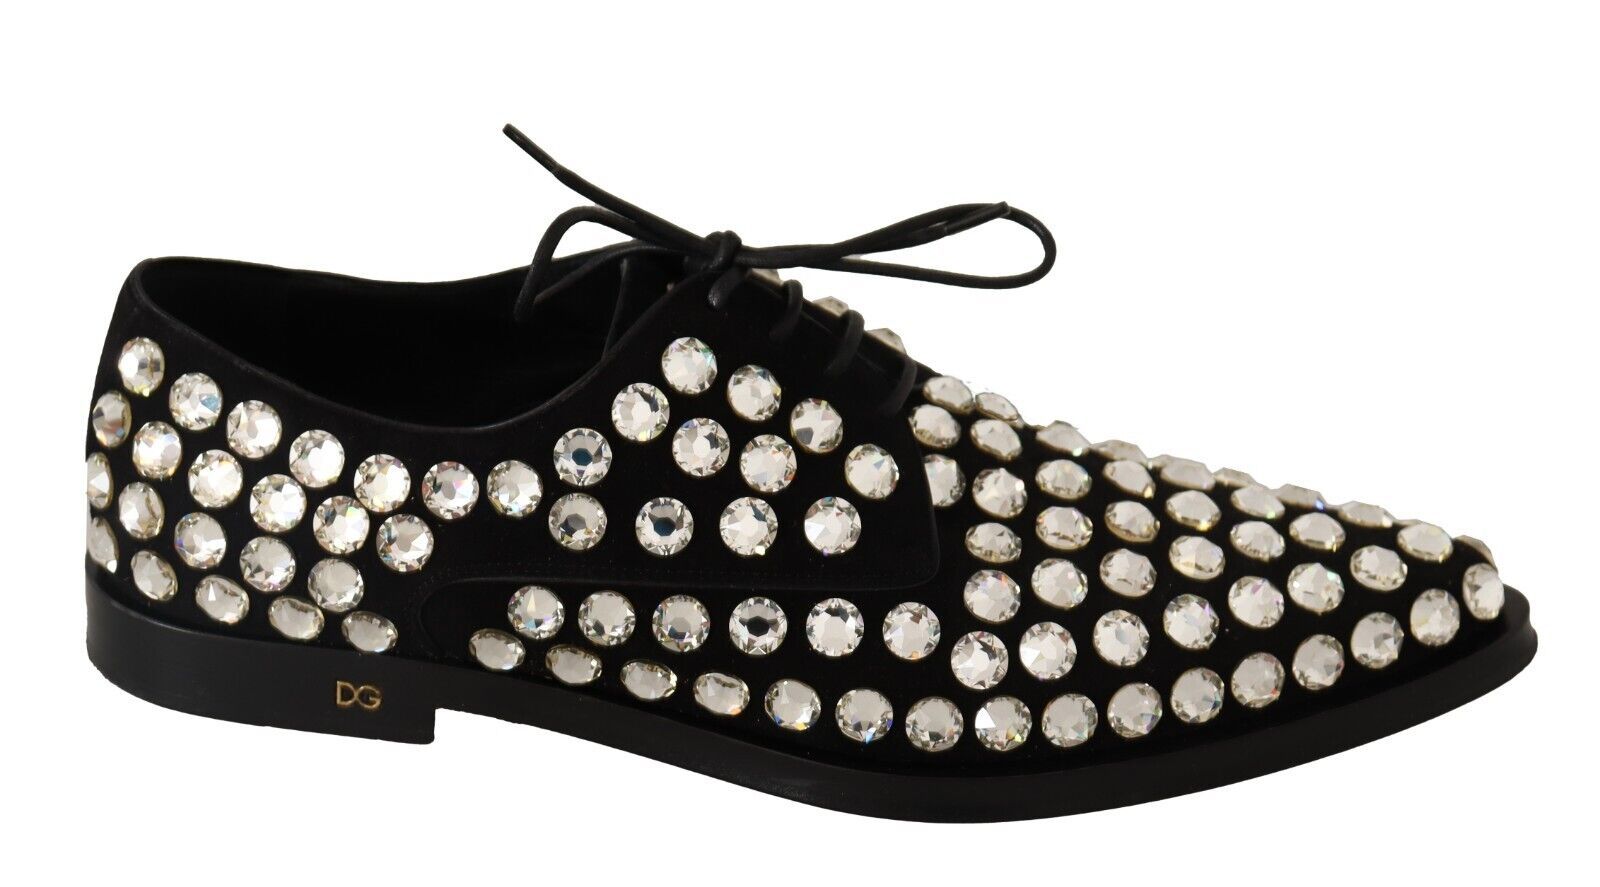 Black Dolce & Gabbana Black Leather Crystals Lace Up Formal Shoes EU39/US8.5